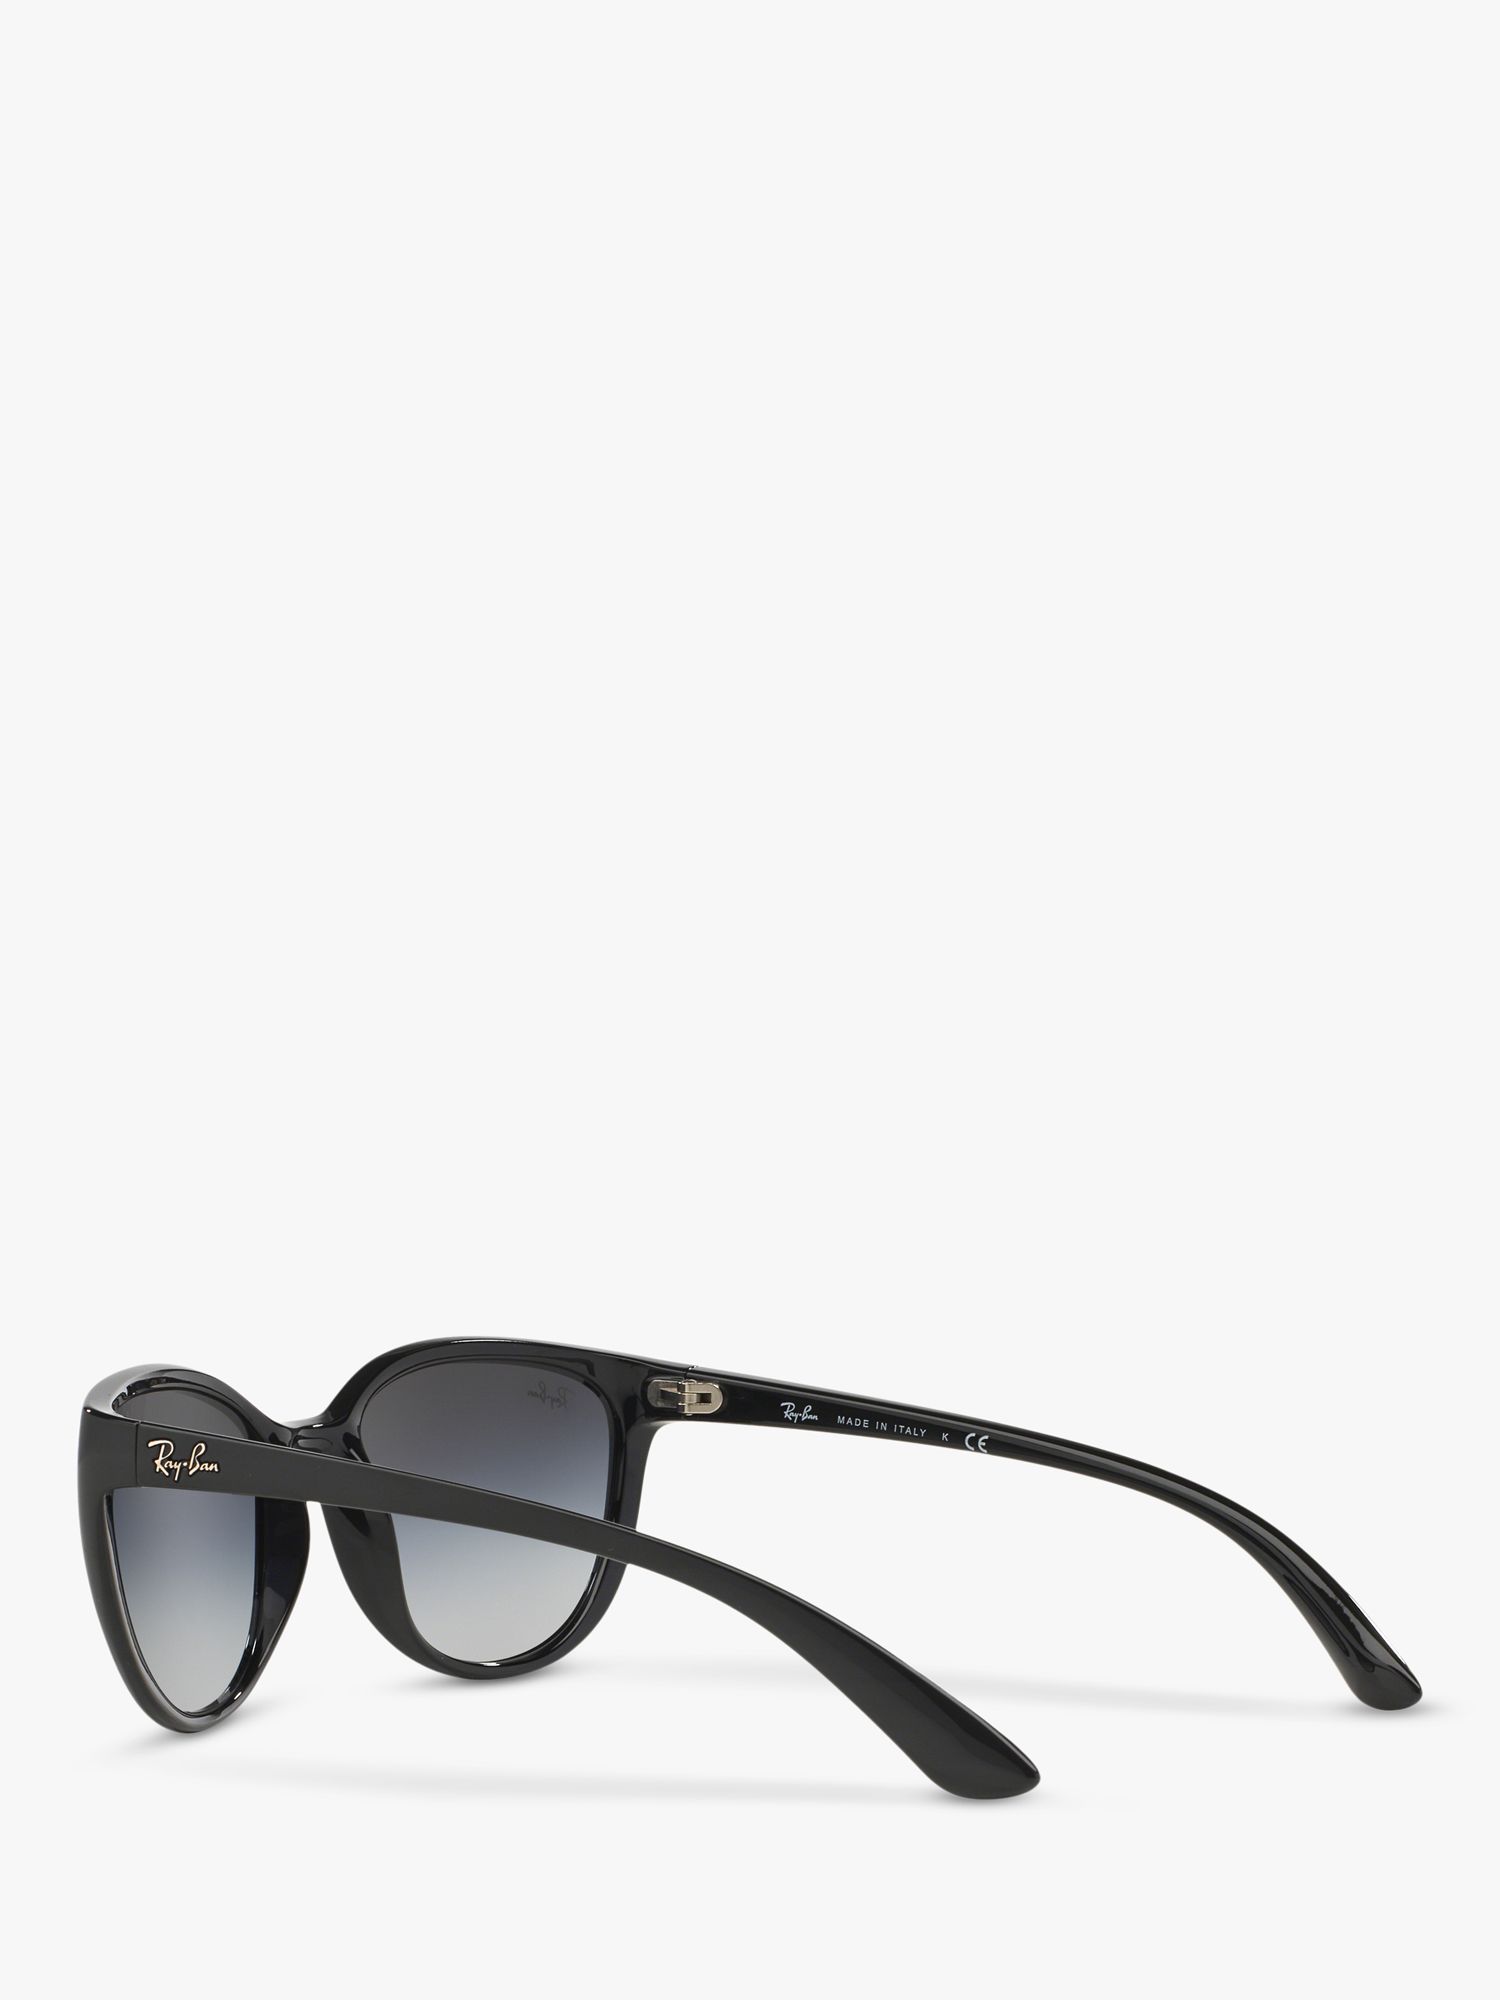 Ray-Ban RB4167 59 Women's Emma Irregular Sunglasses, Black/Grey